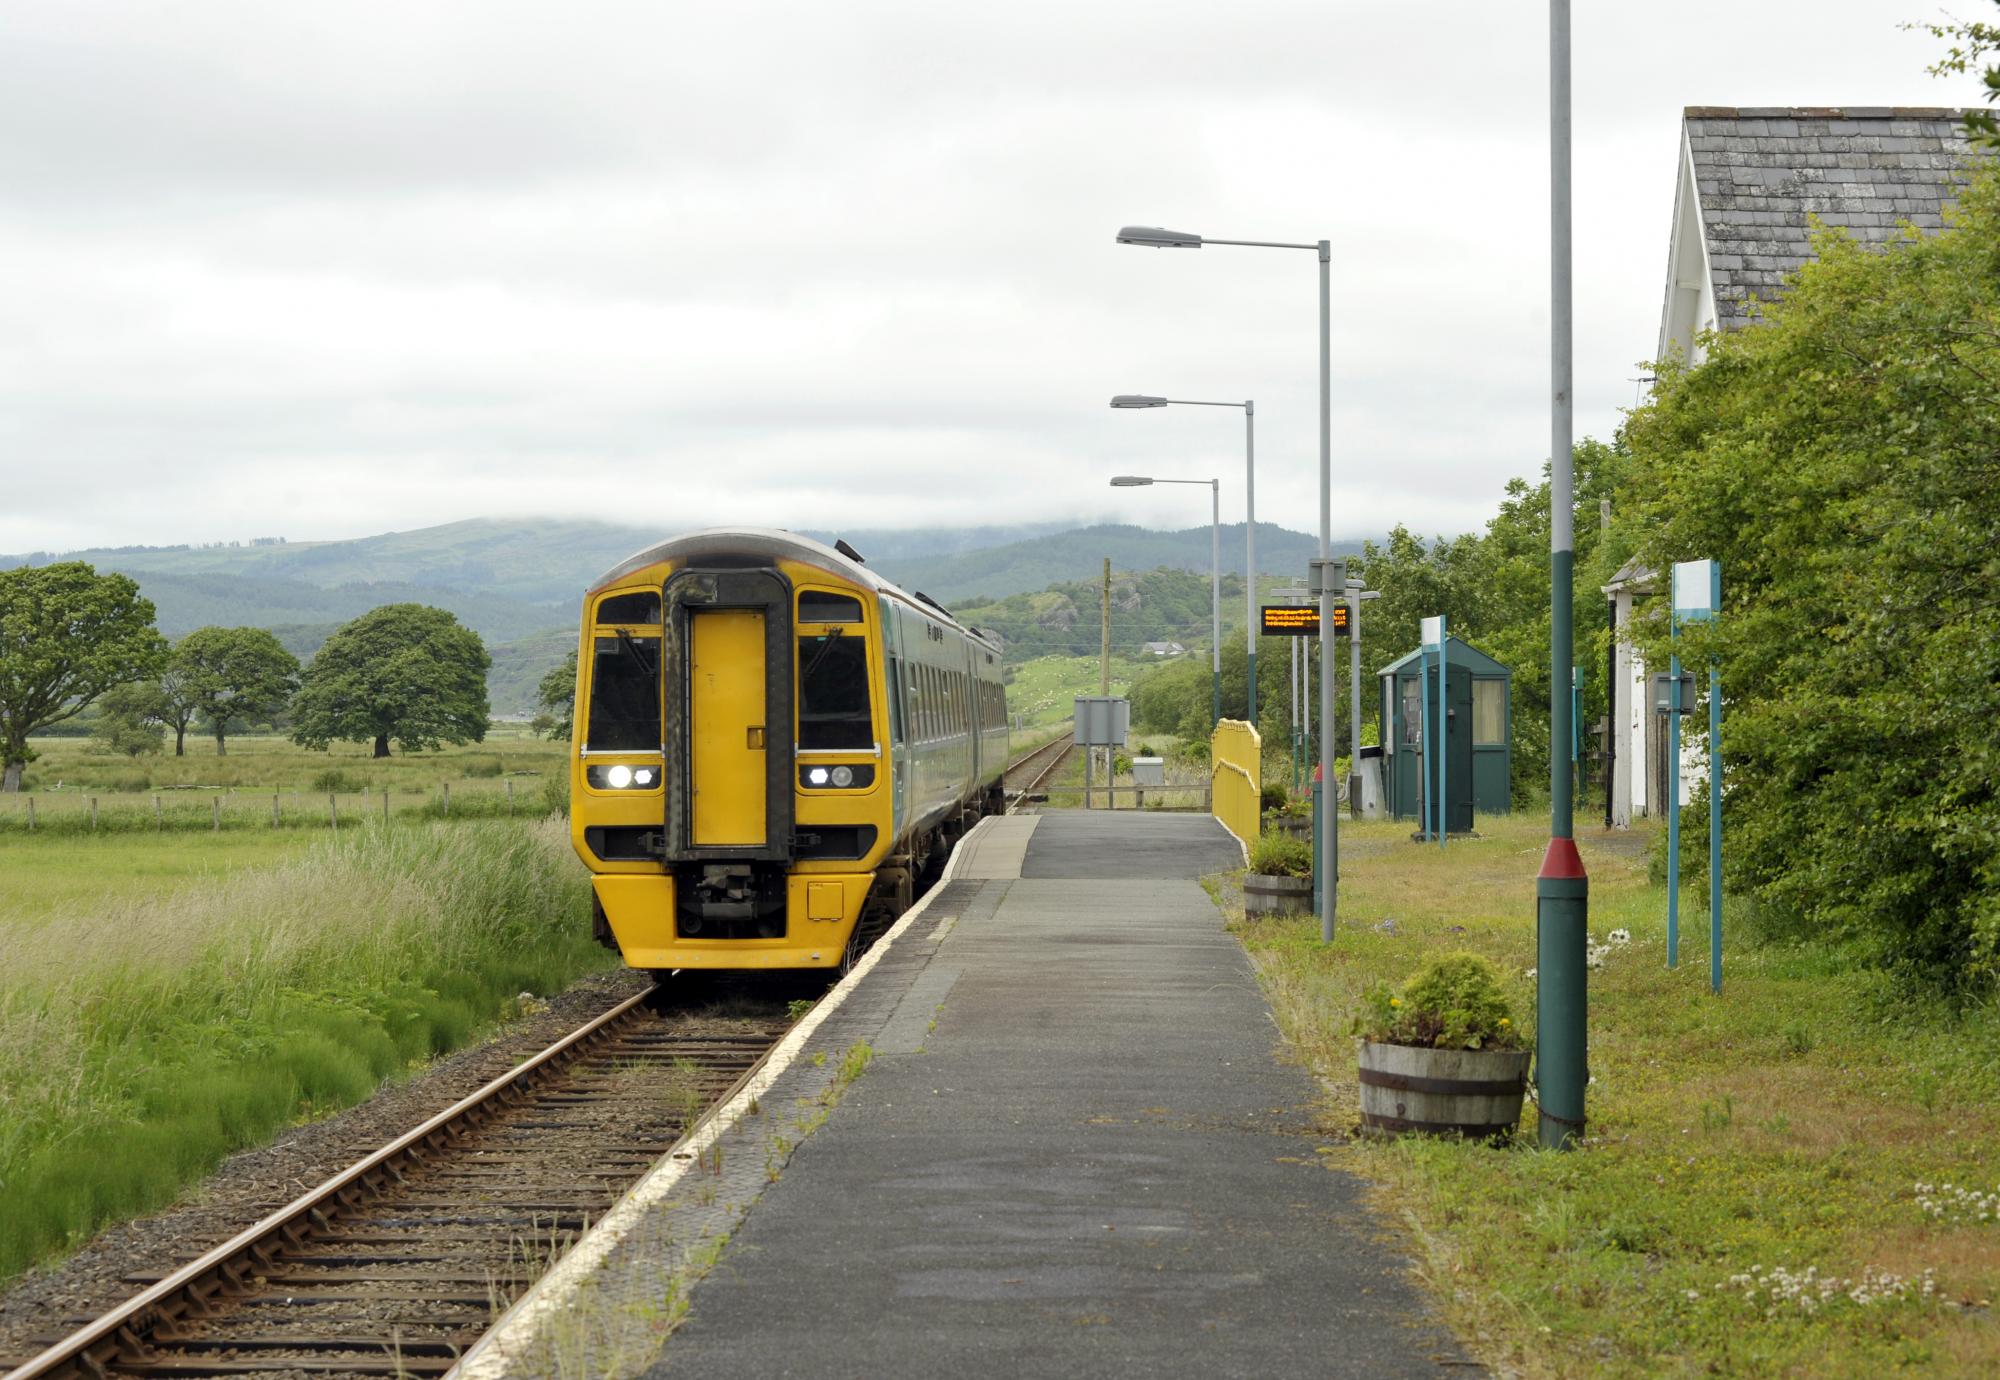 Railway diesel train locomotive at rural Talsarnau station, Gwynedd in North Wales UK, via Istock